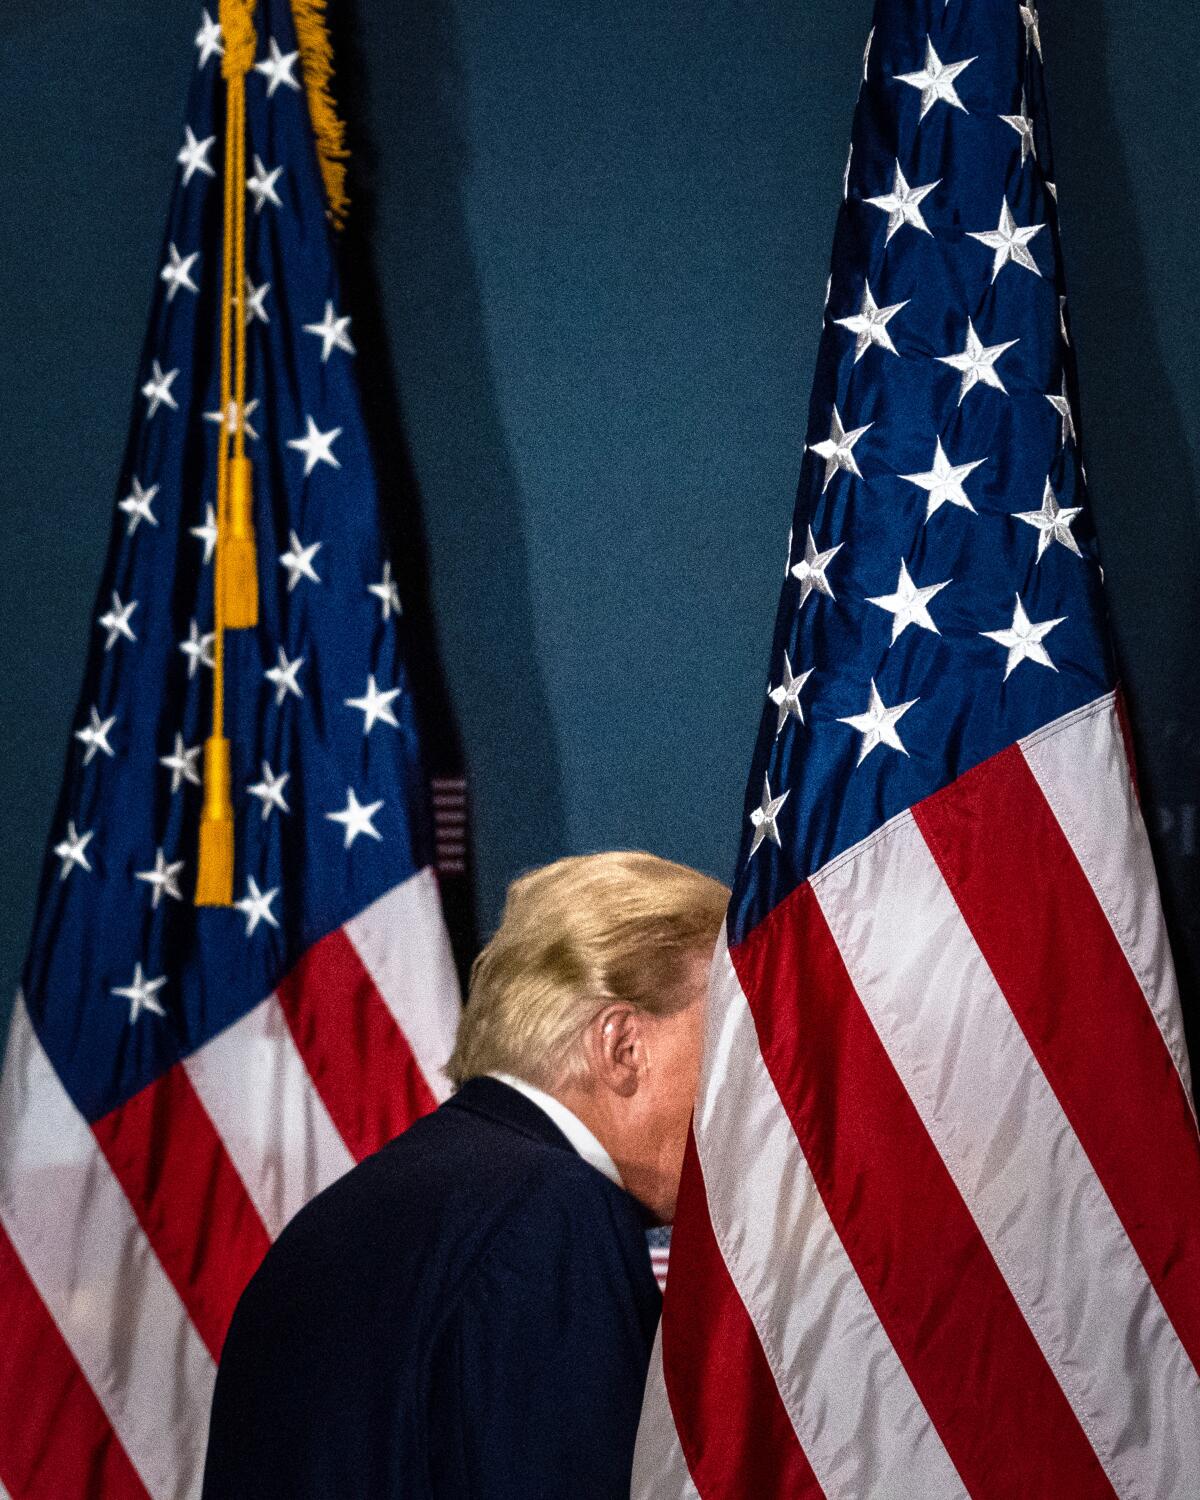 Former President Donald Trump walks past American flags